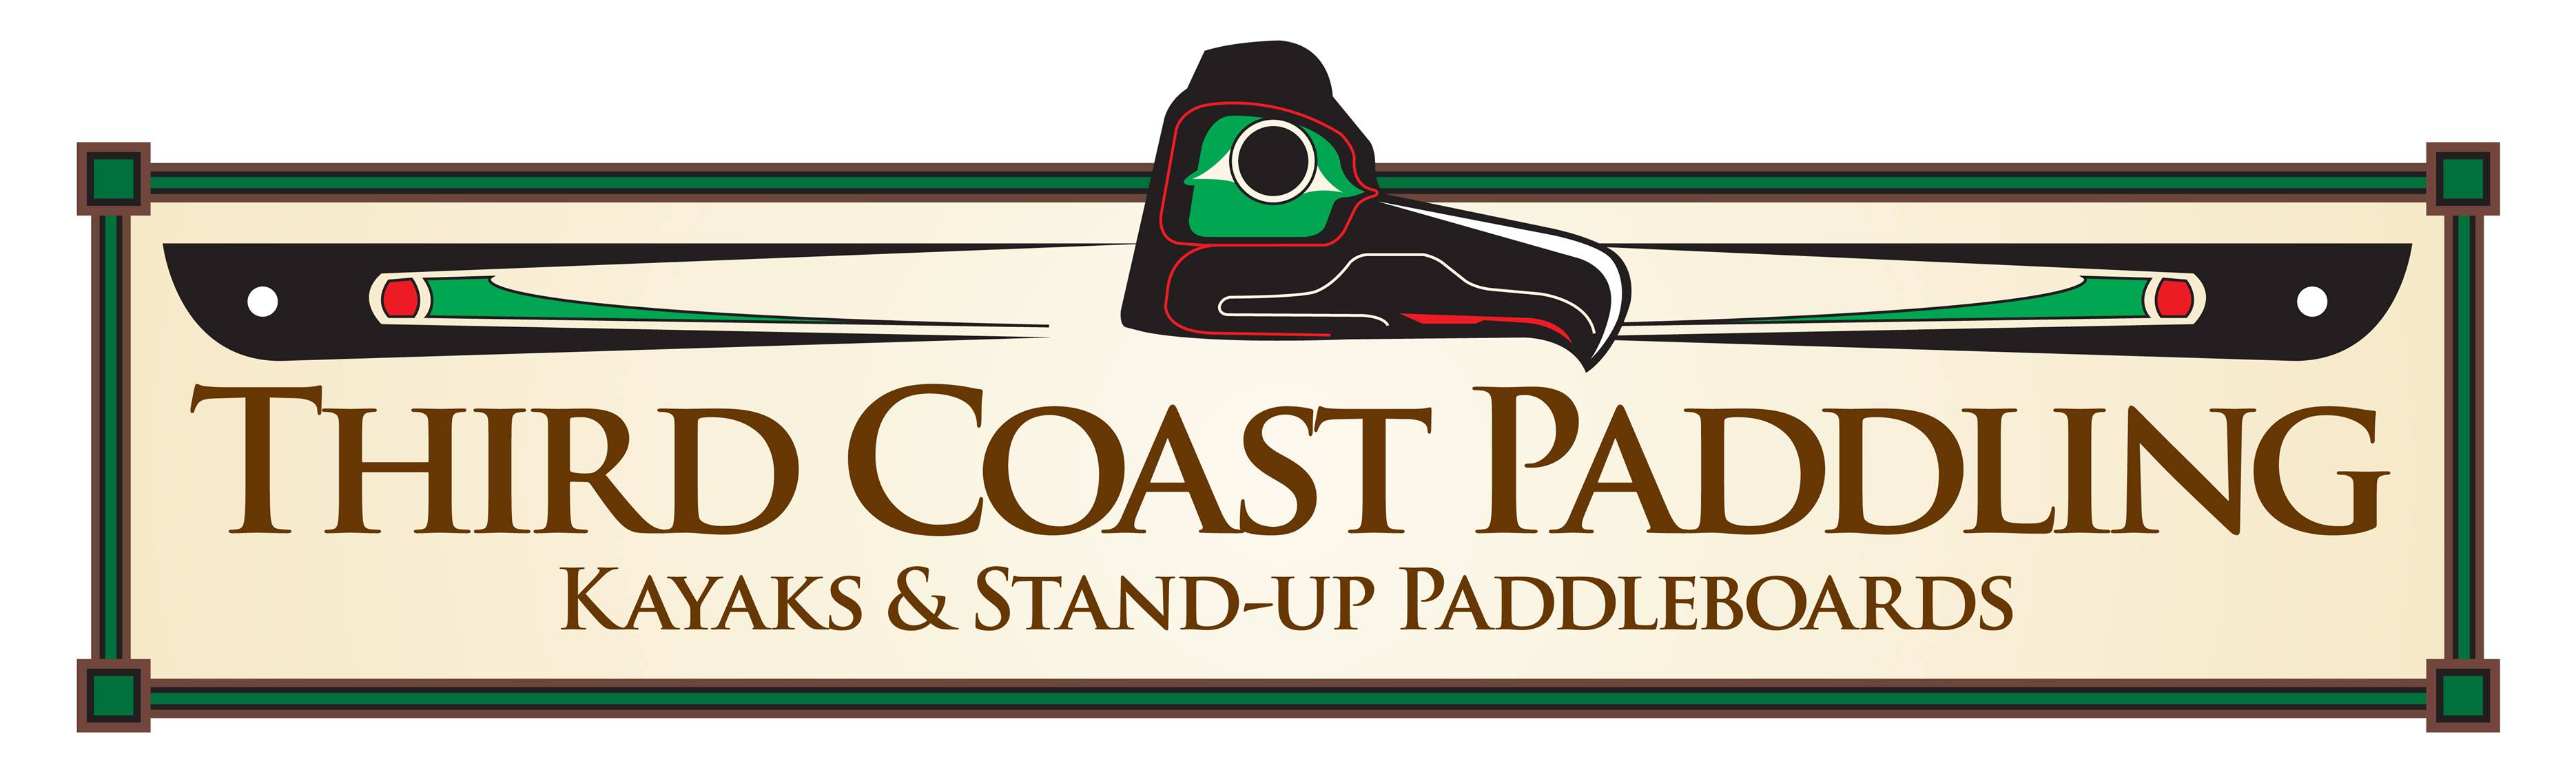 Third Coast Paddling Logo